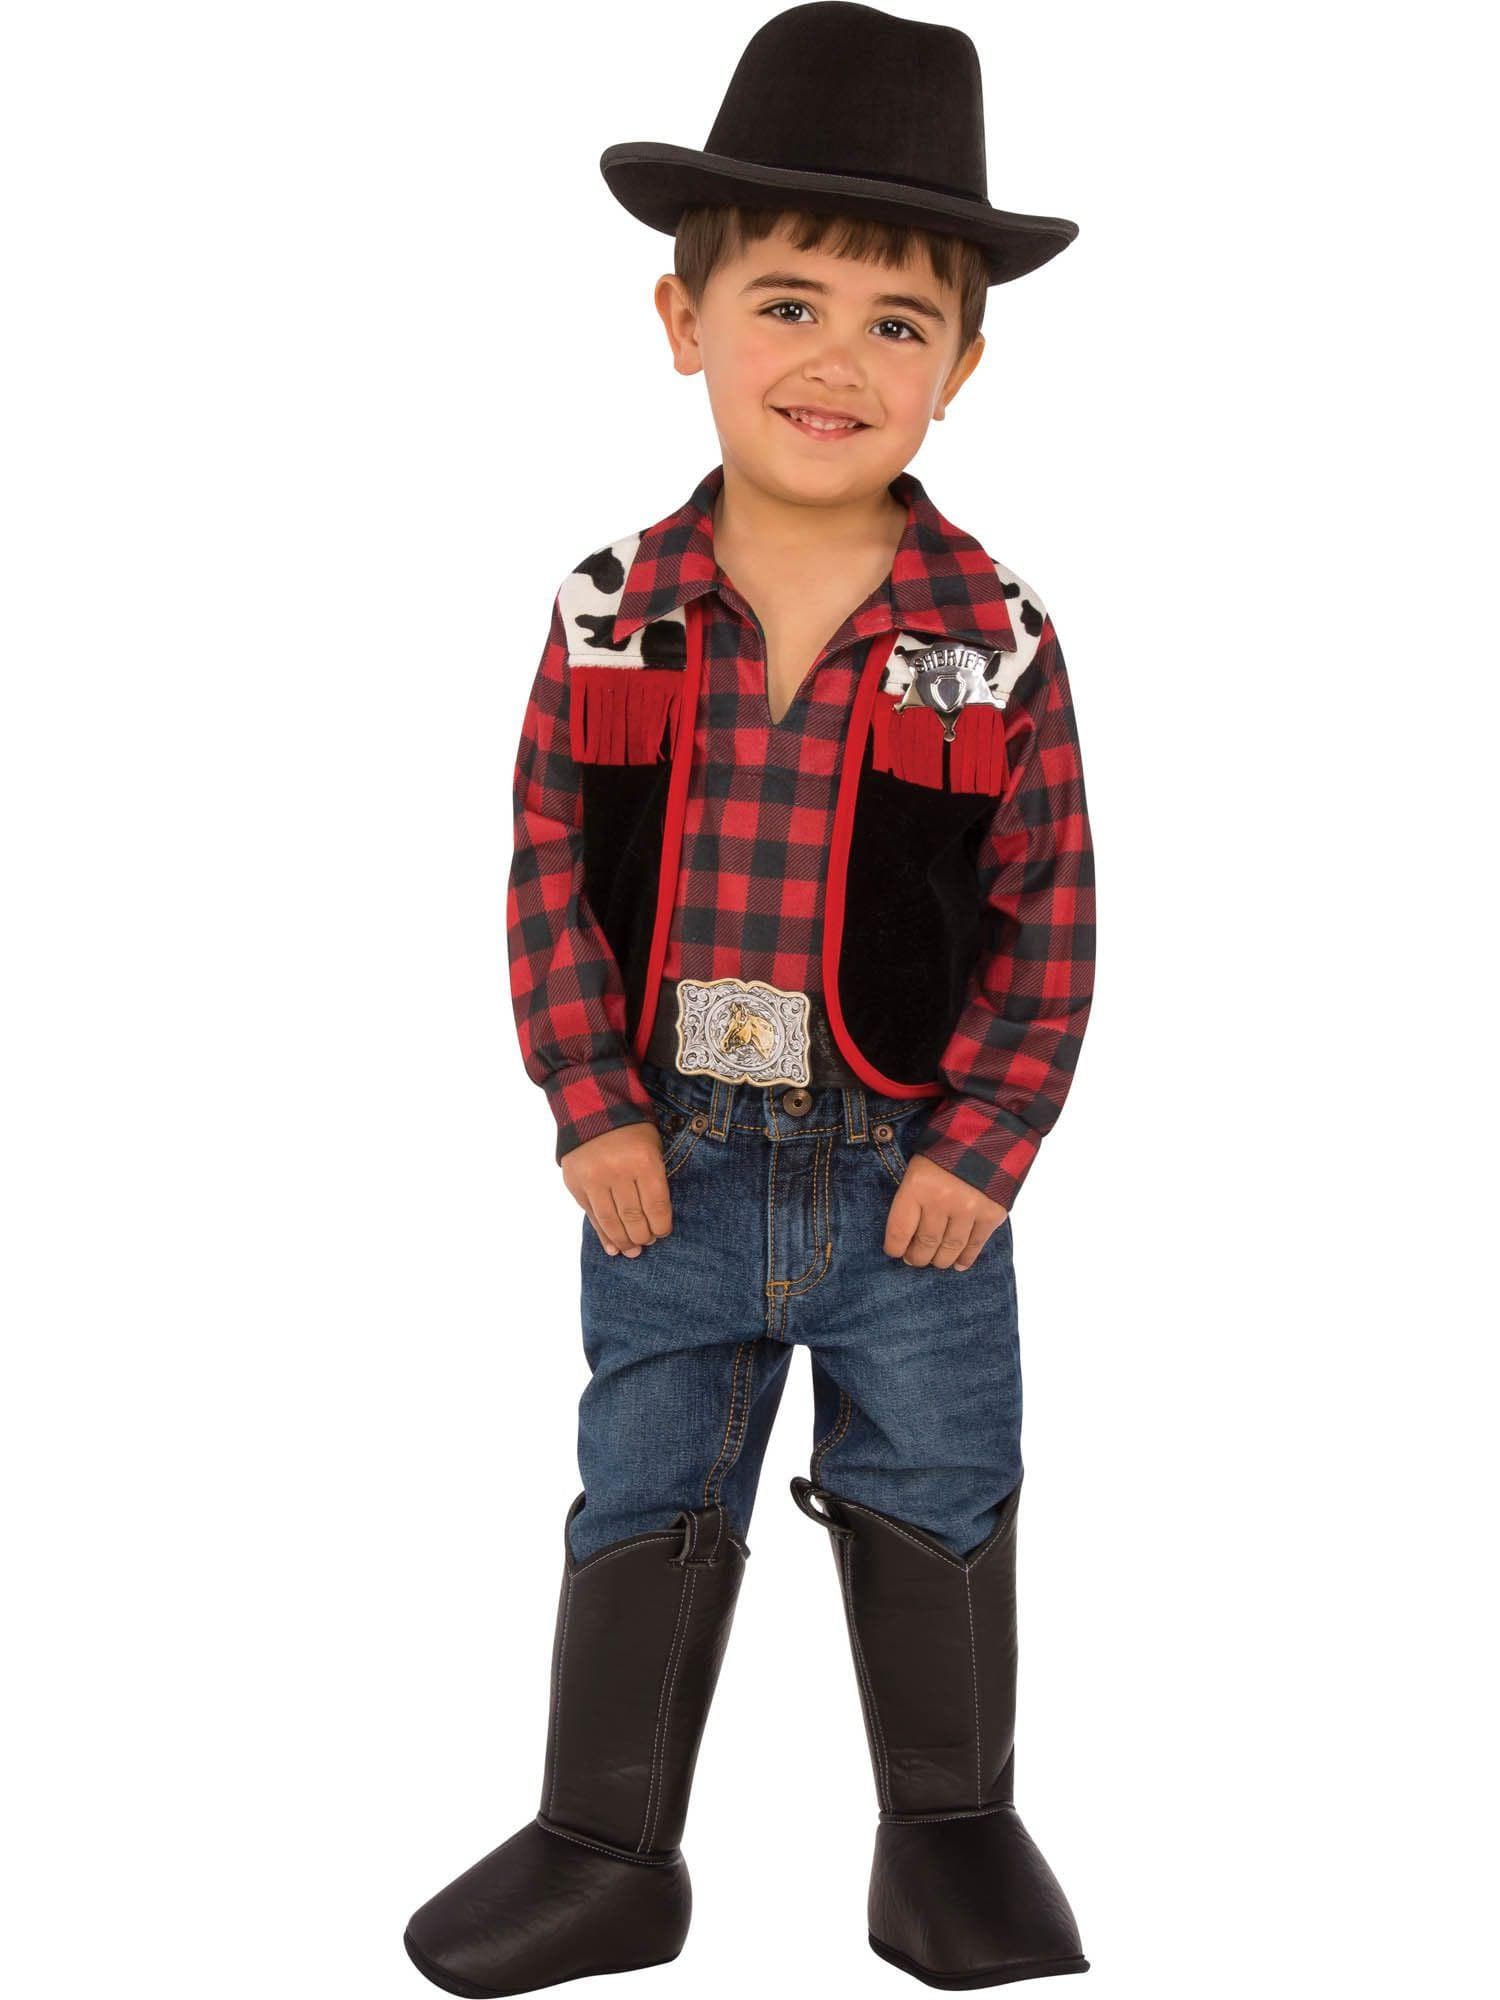 Kids Cowboy Costume - costumes.com